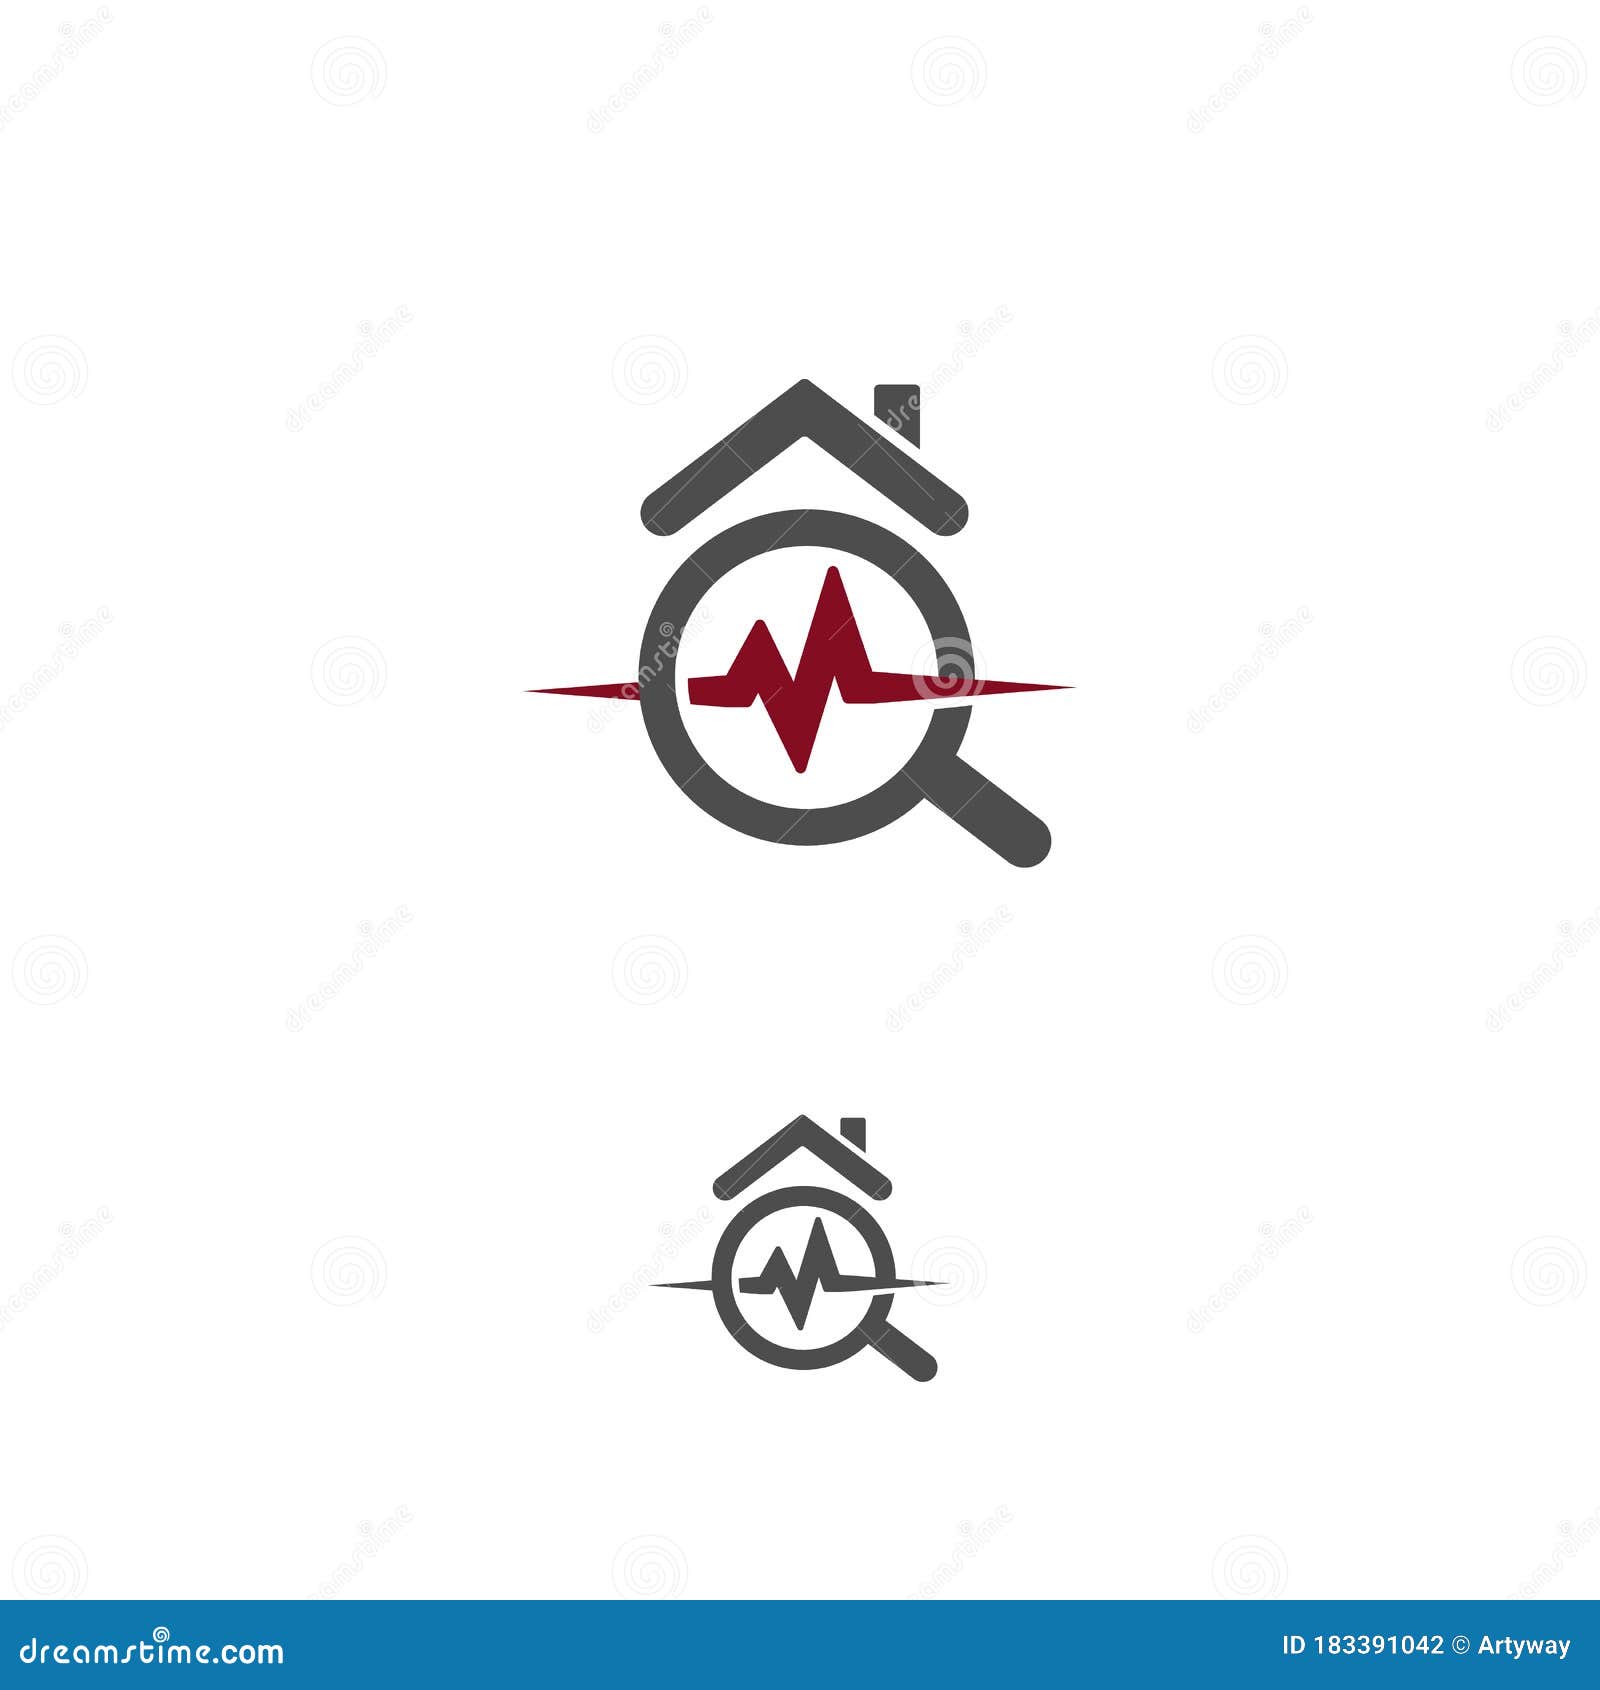 house healthcare icon. real estate durability test logo. earthquake property damage insurance logotype. home radon